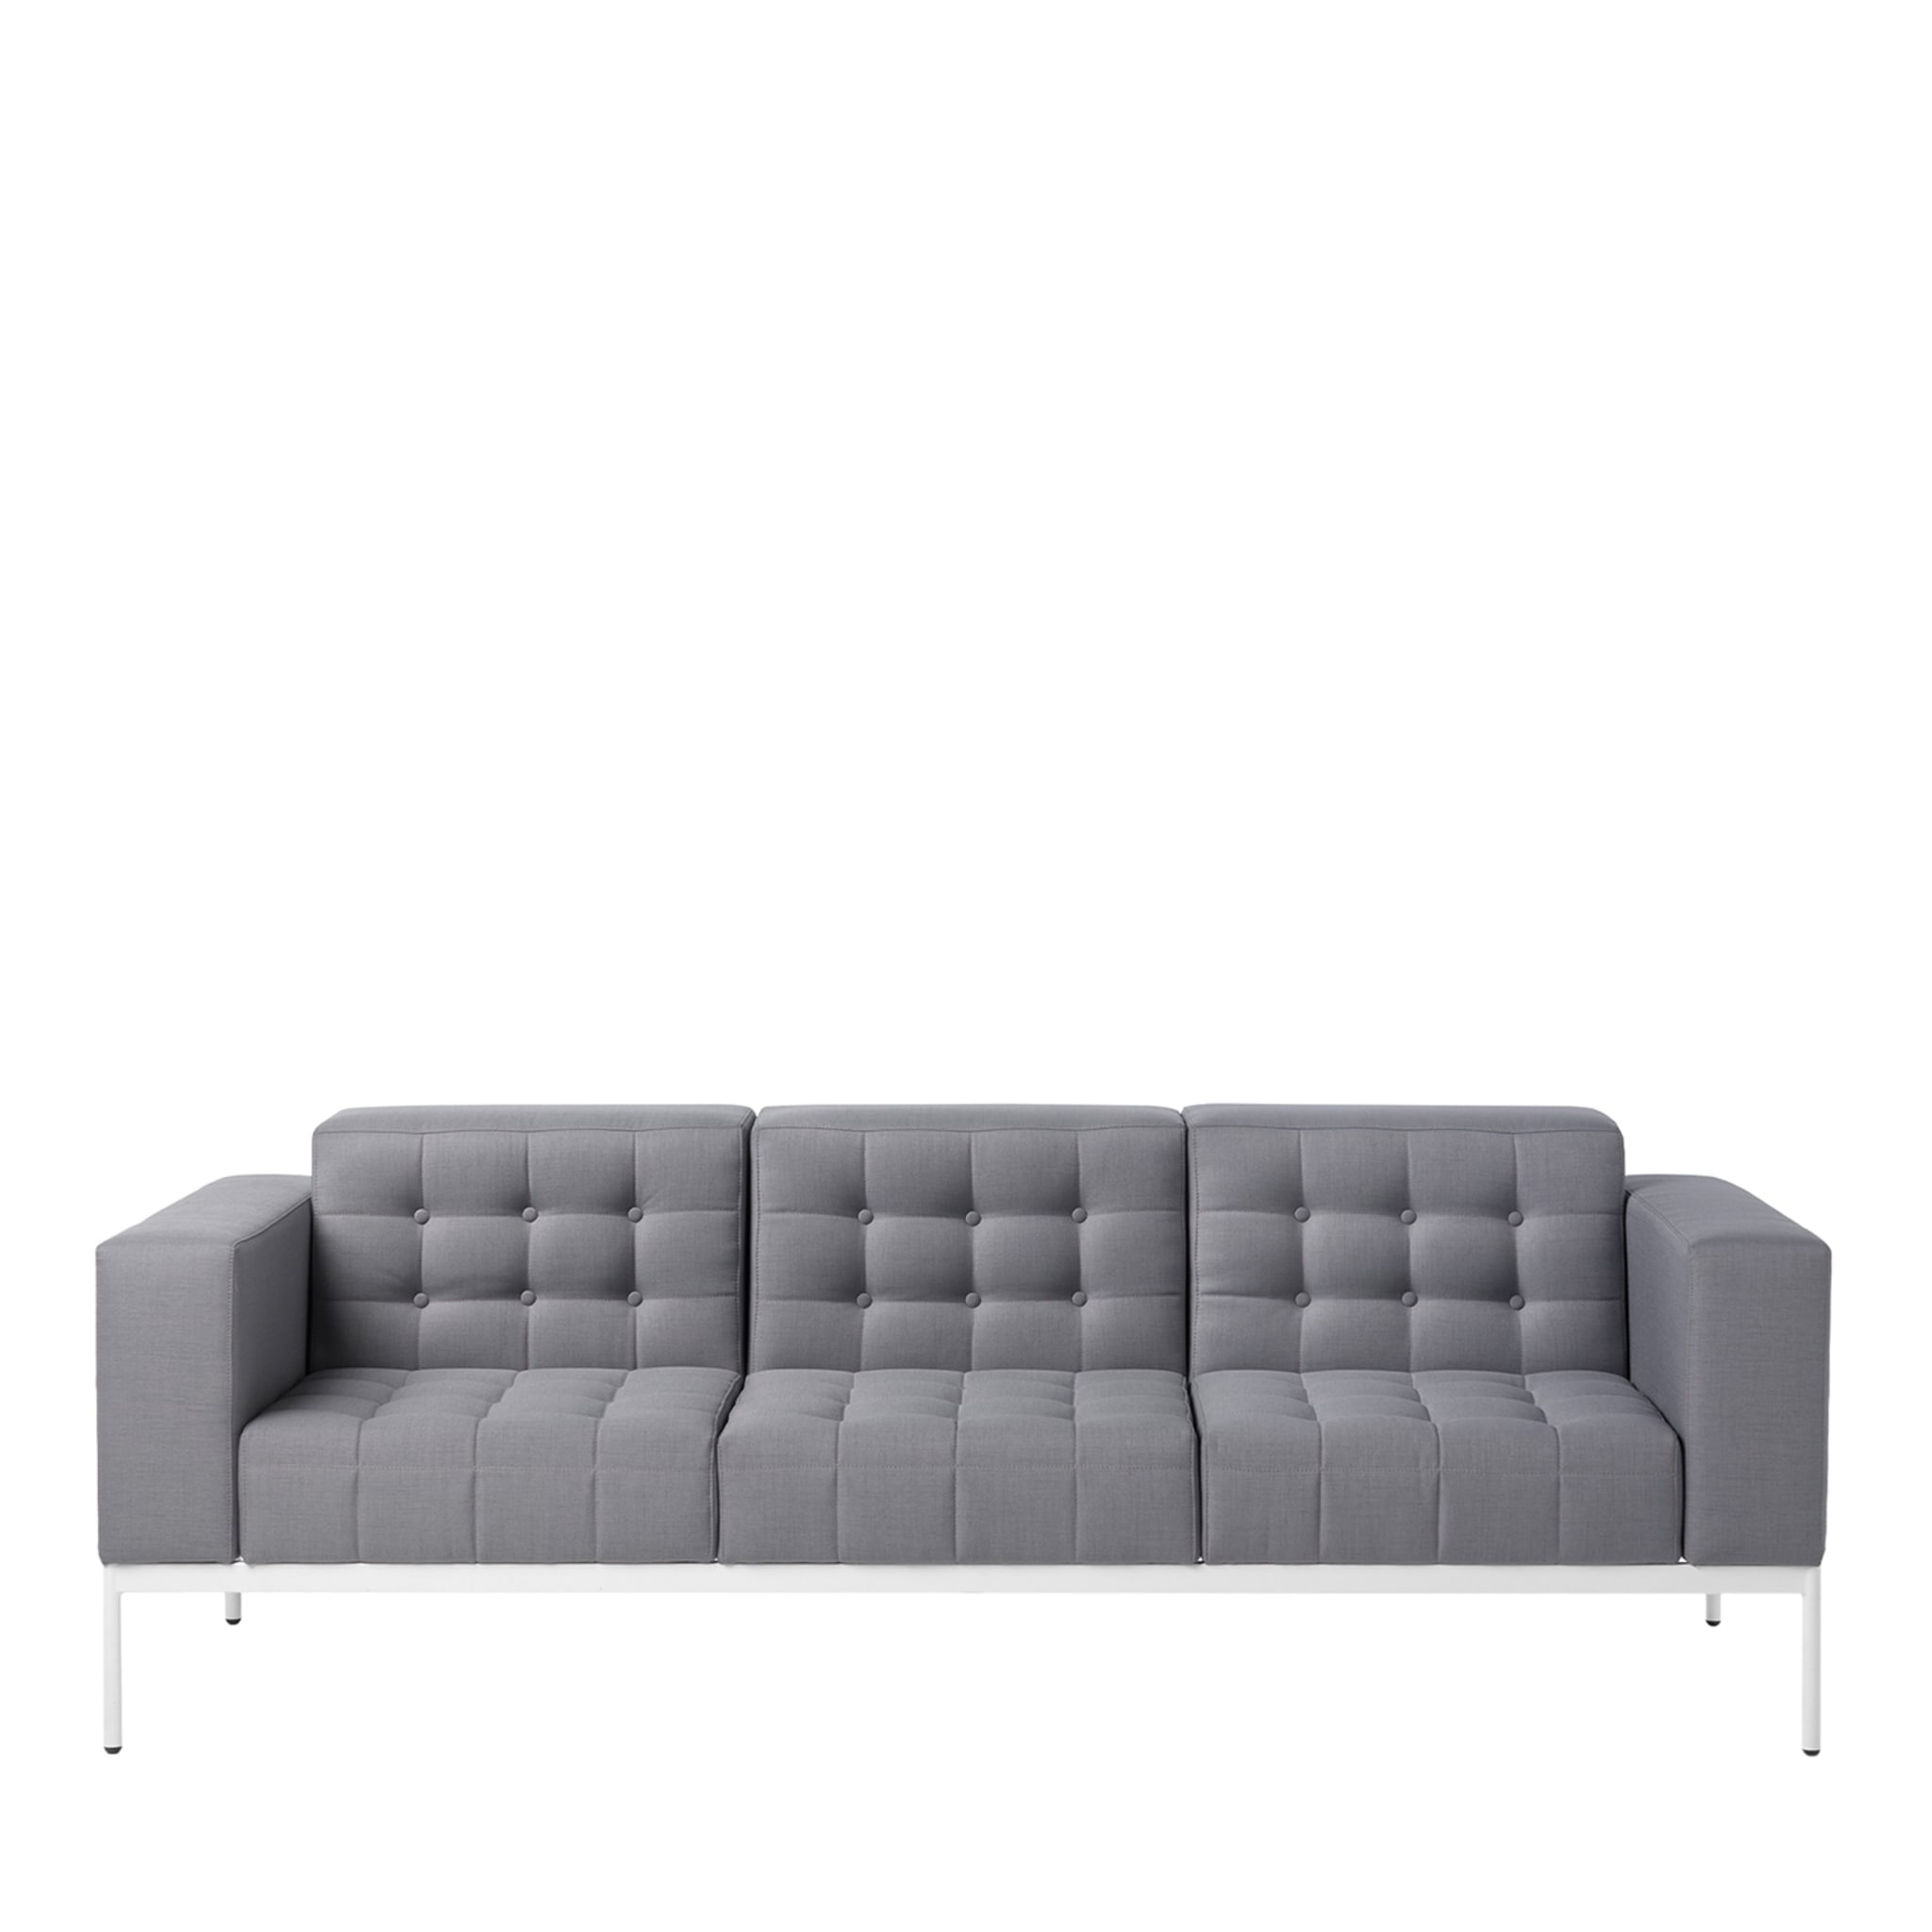 Classmade 3 seater Grey Sofa - Main view